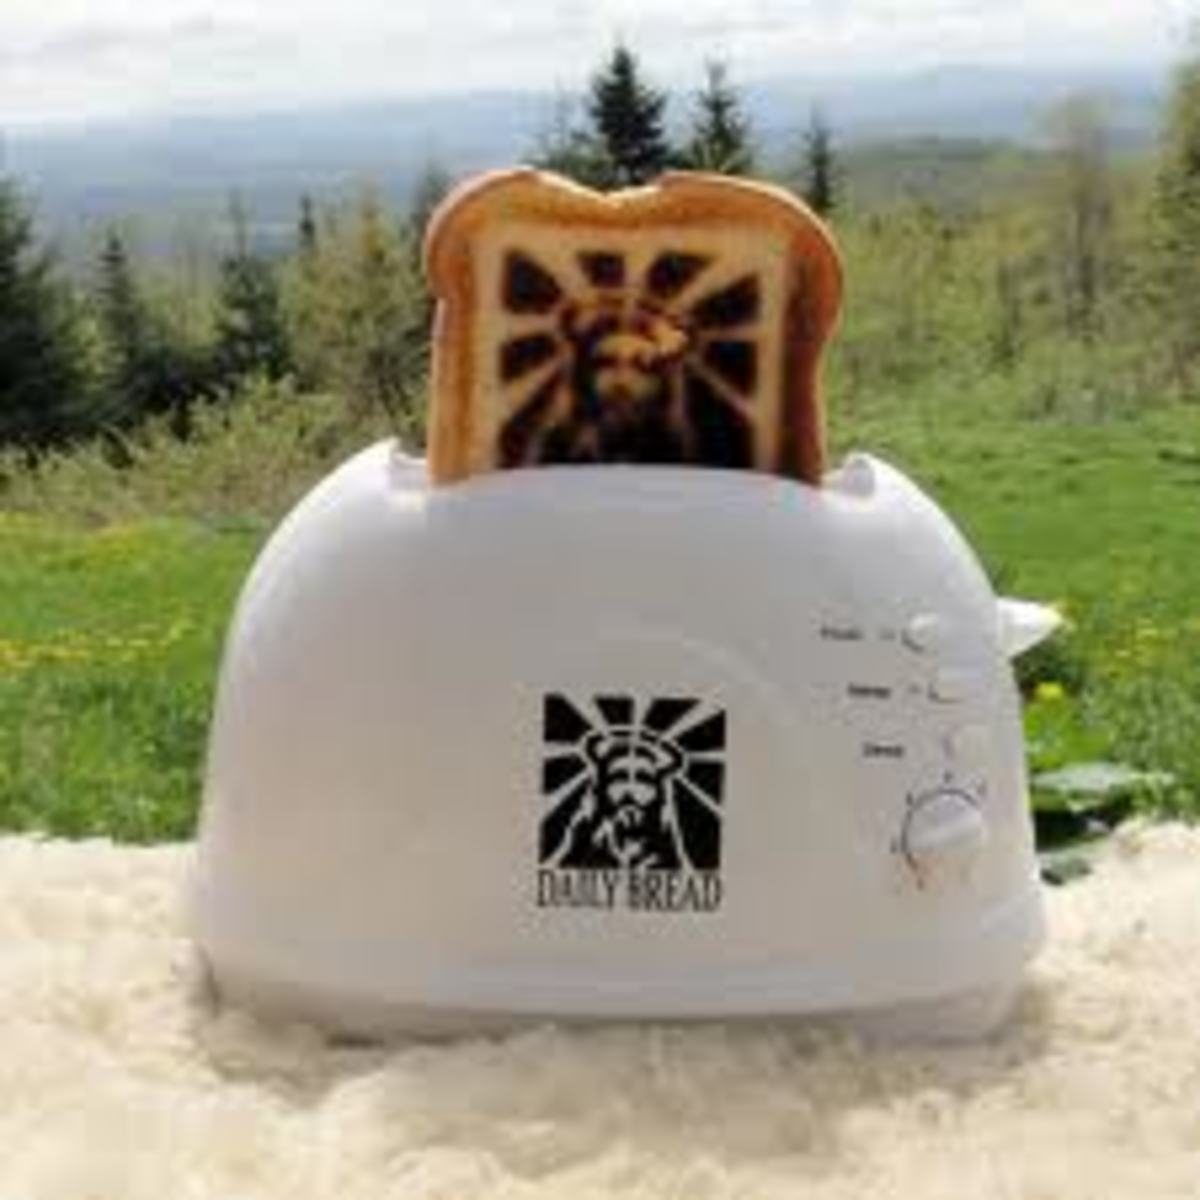 The Jesus toaster